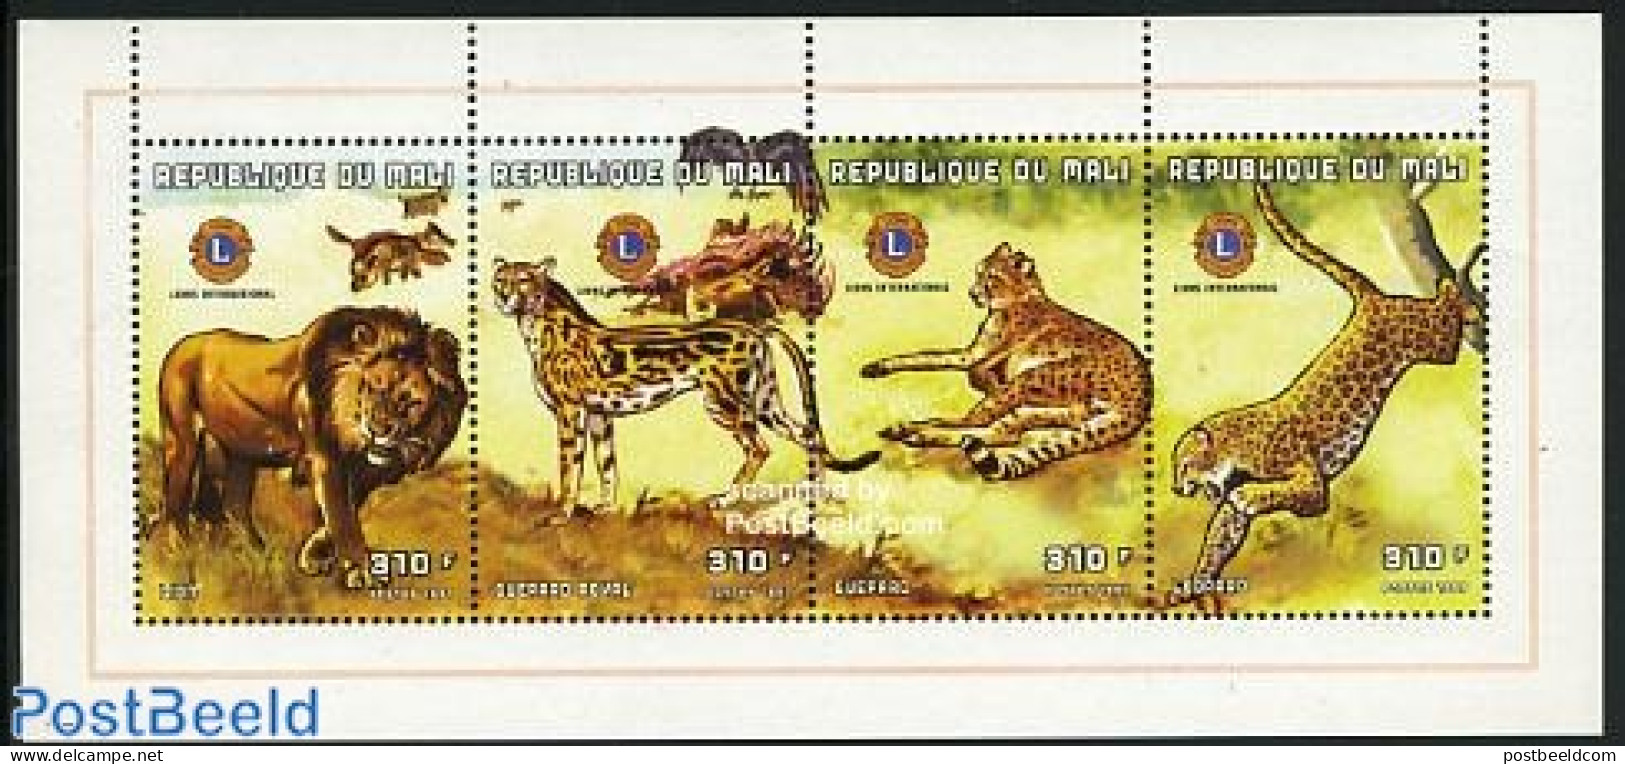 Mali 1998 Rotary, Lions International, Fauna 4v M/s (4x310F), Mint NH, Nature - Various - Cat Family - Lions Club - Ro.. - Rotary, Club Leones